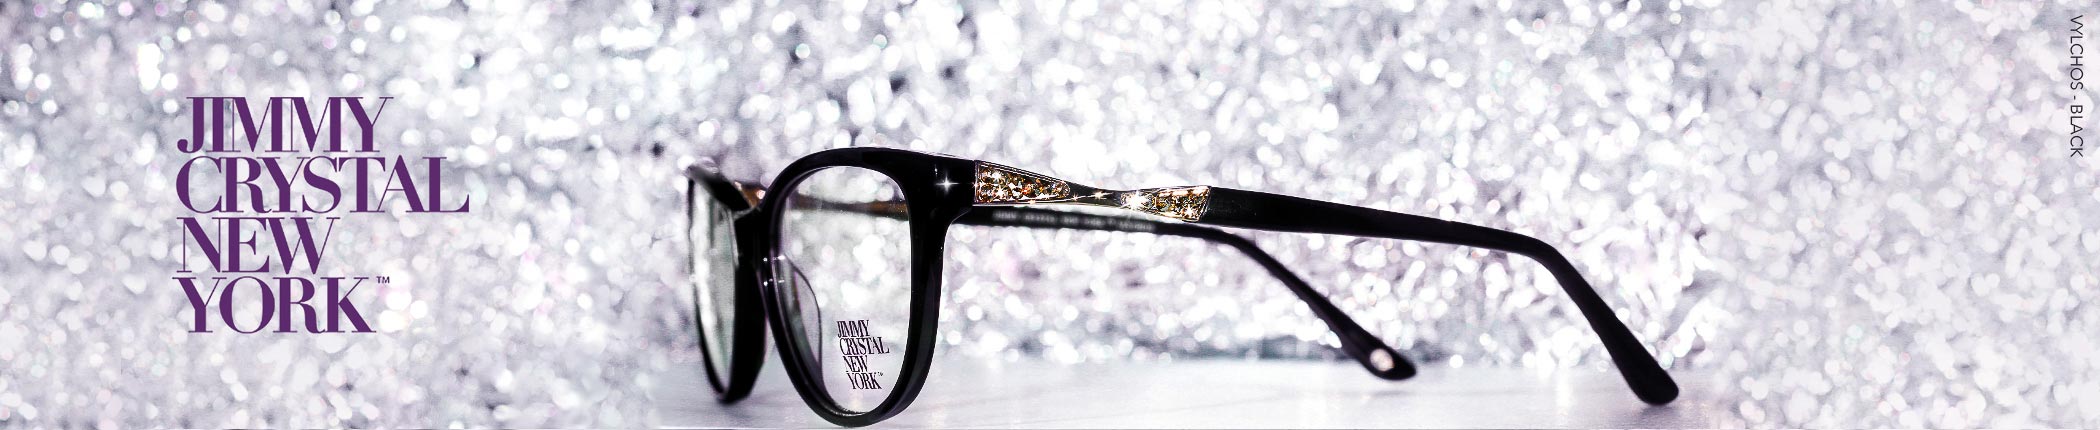 Shop Jimmy Crystal New York Eyeglasses & Sunglasses - featuring Vlychos